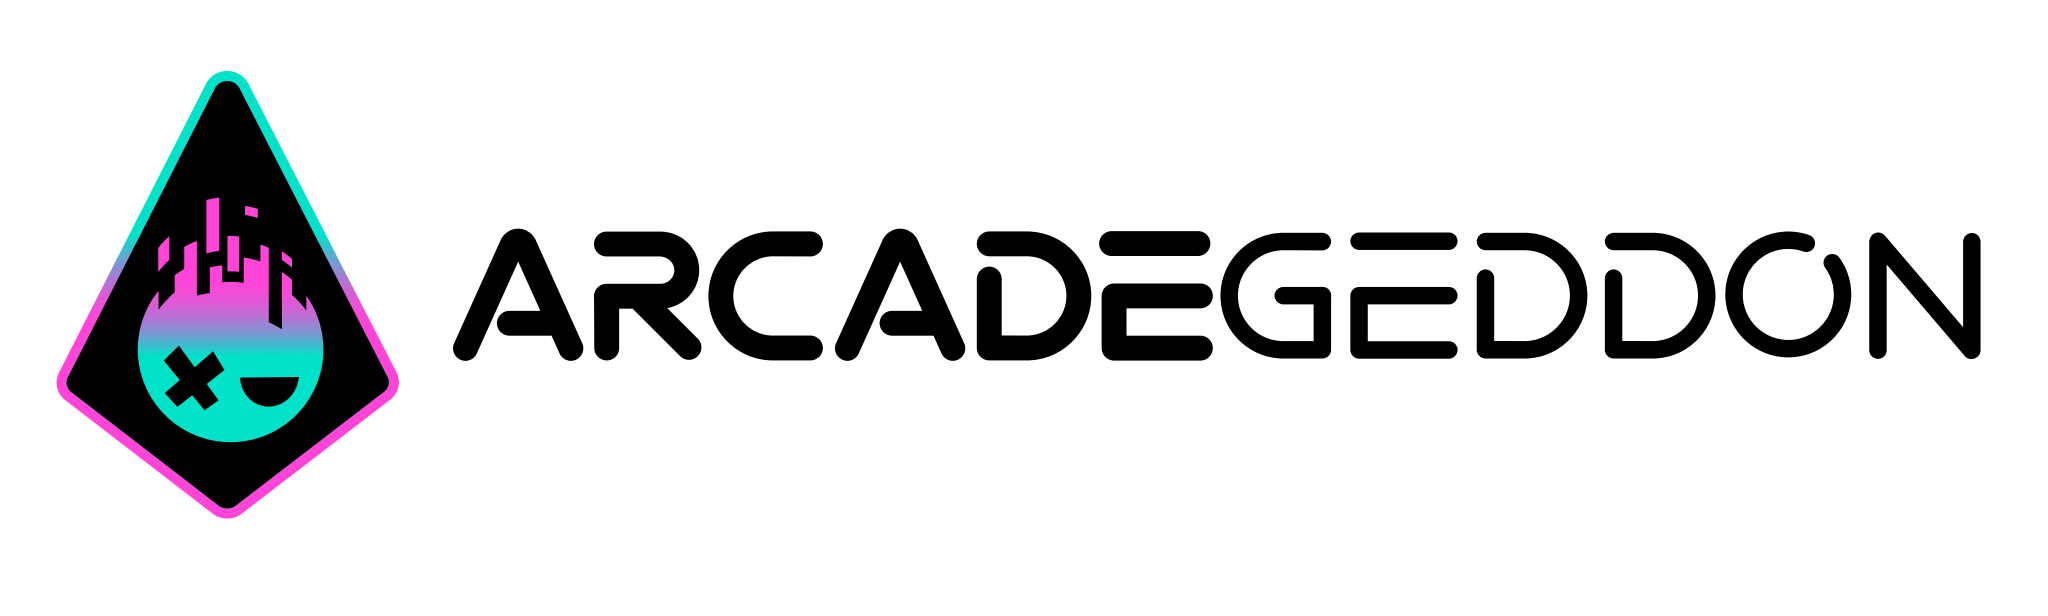 Arcadegeddon Logo